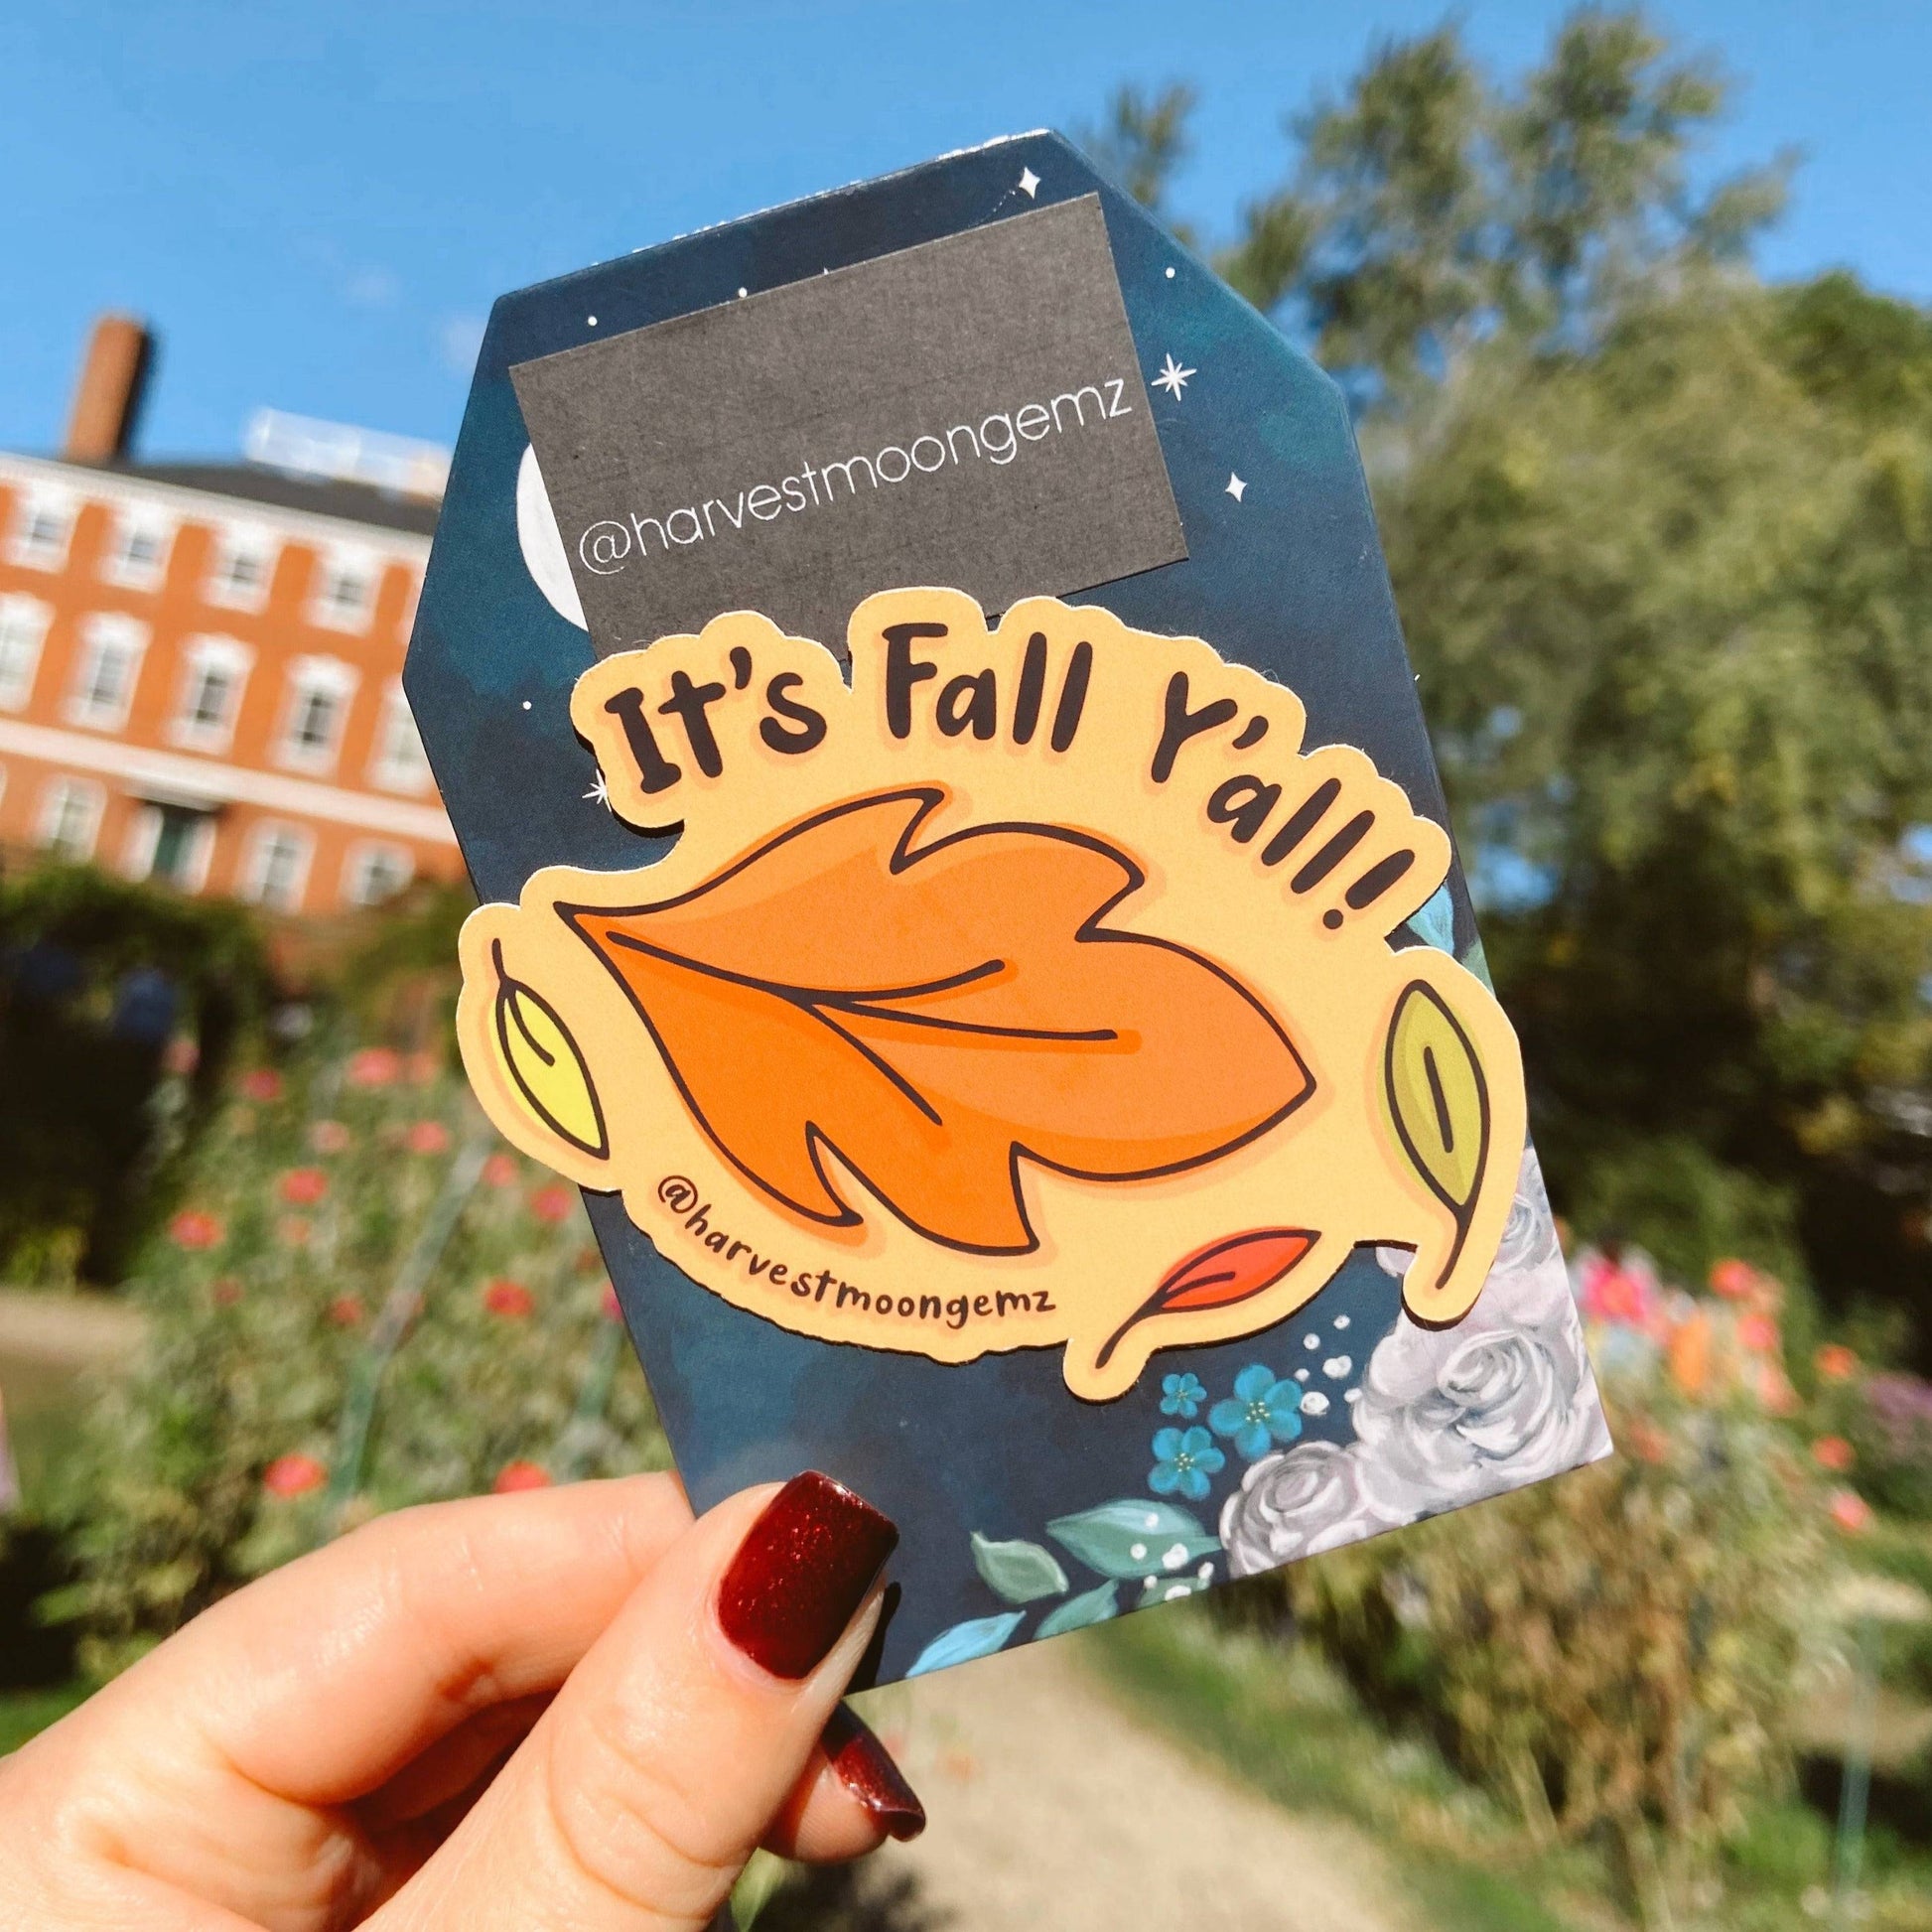 It's Fall Y'all Sticker Harvest Moon Gemz